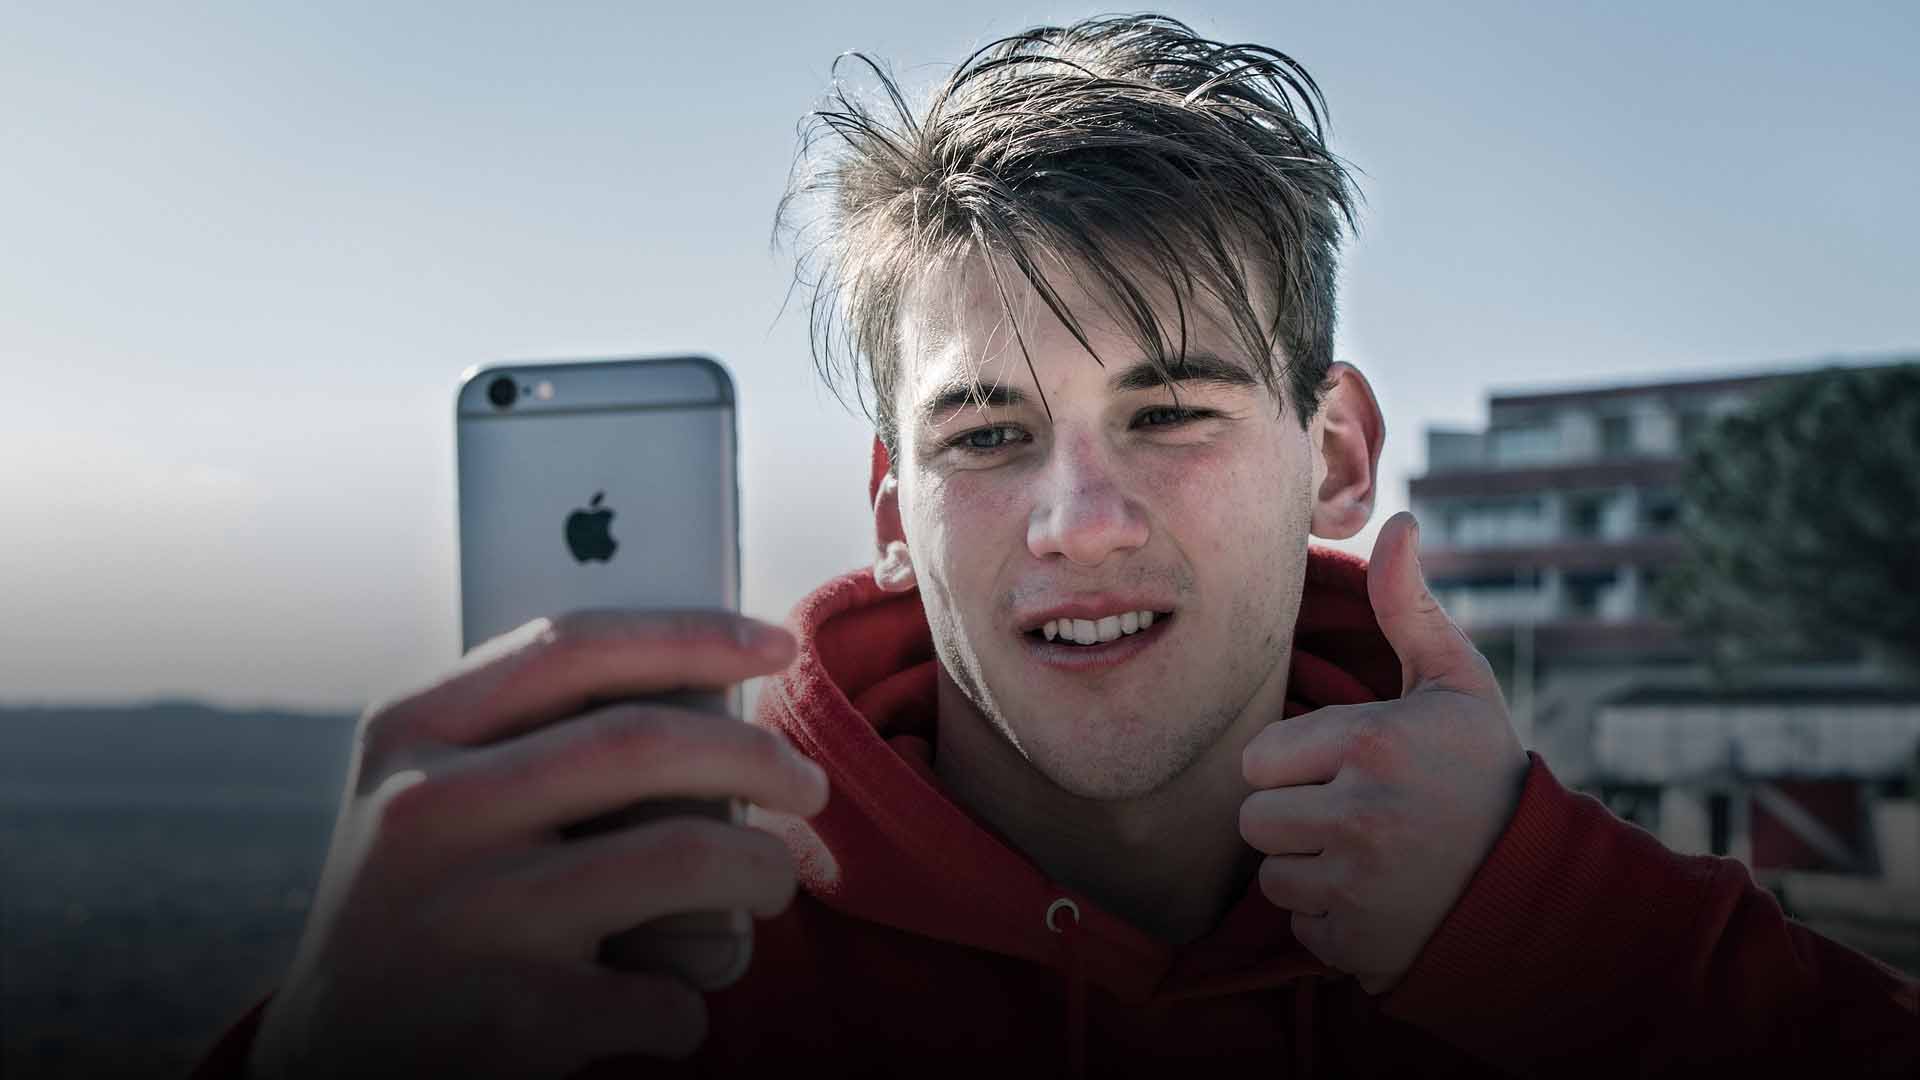 Header - Topsporters als merk op social media - Johan Cruyff Academy